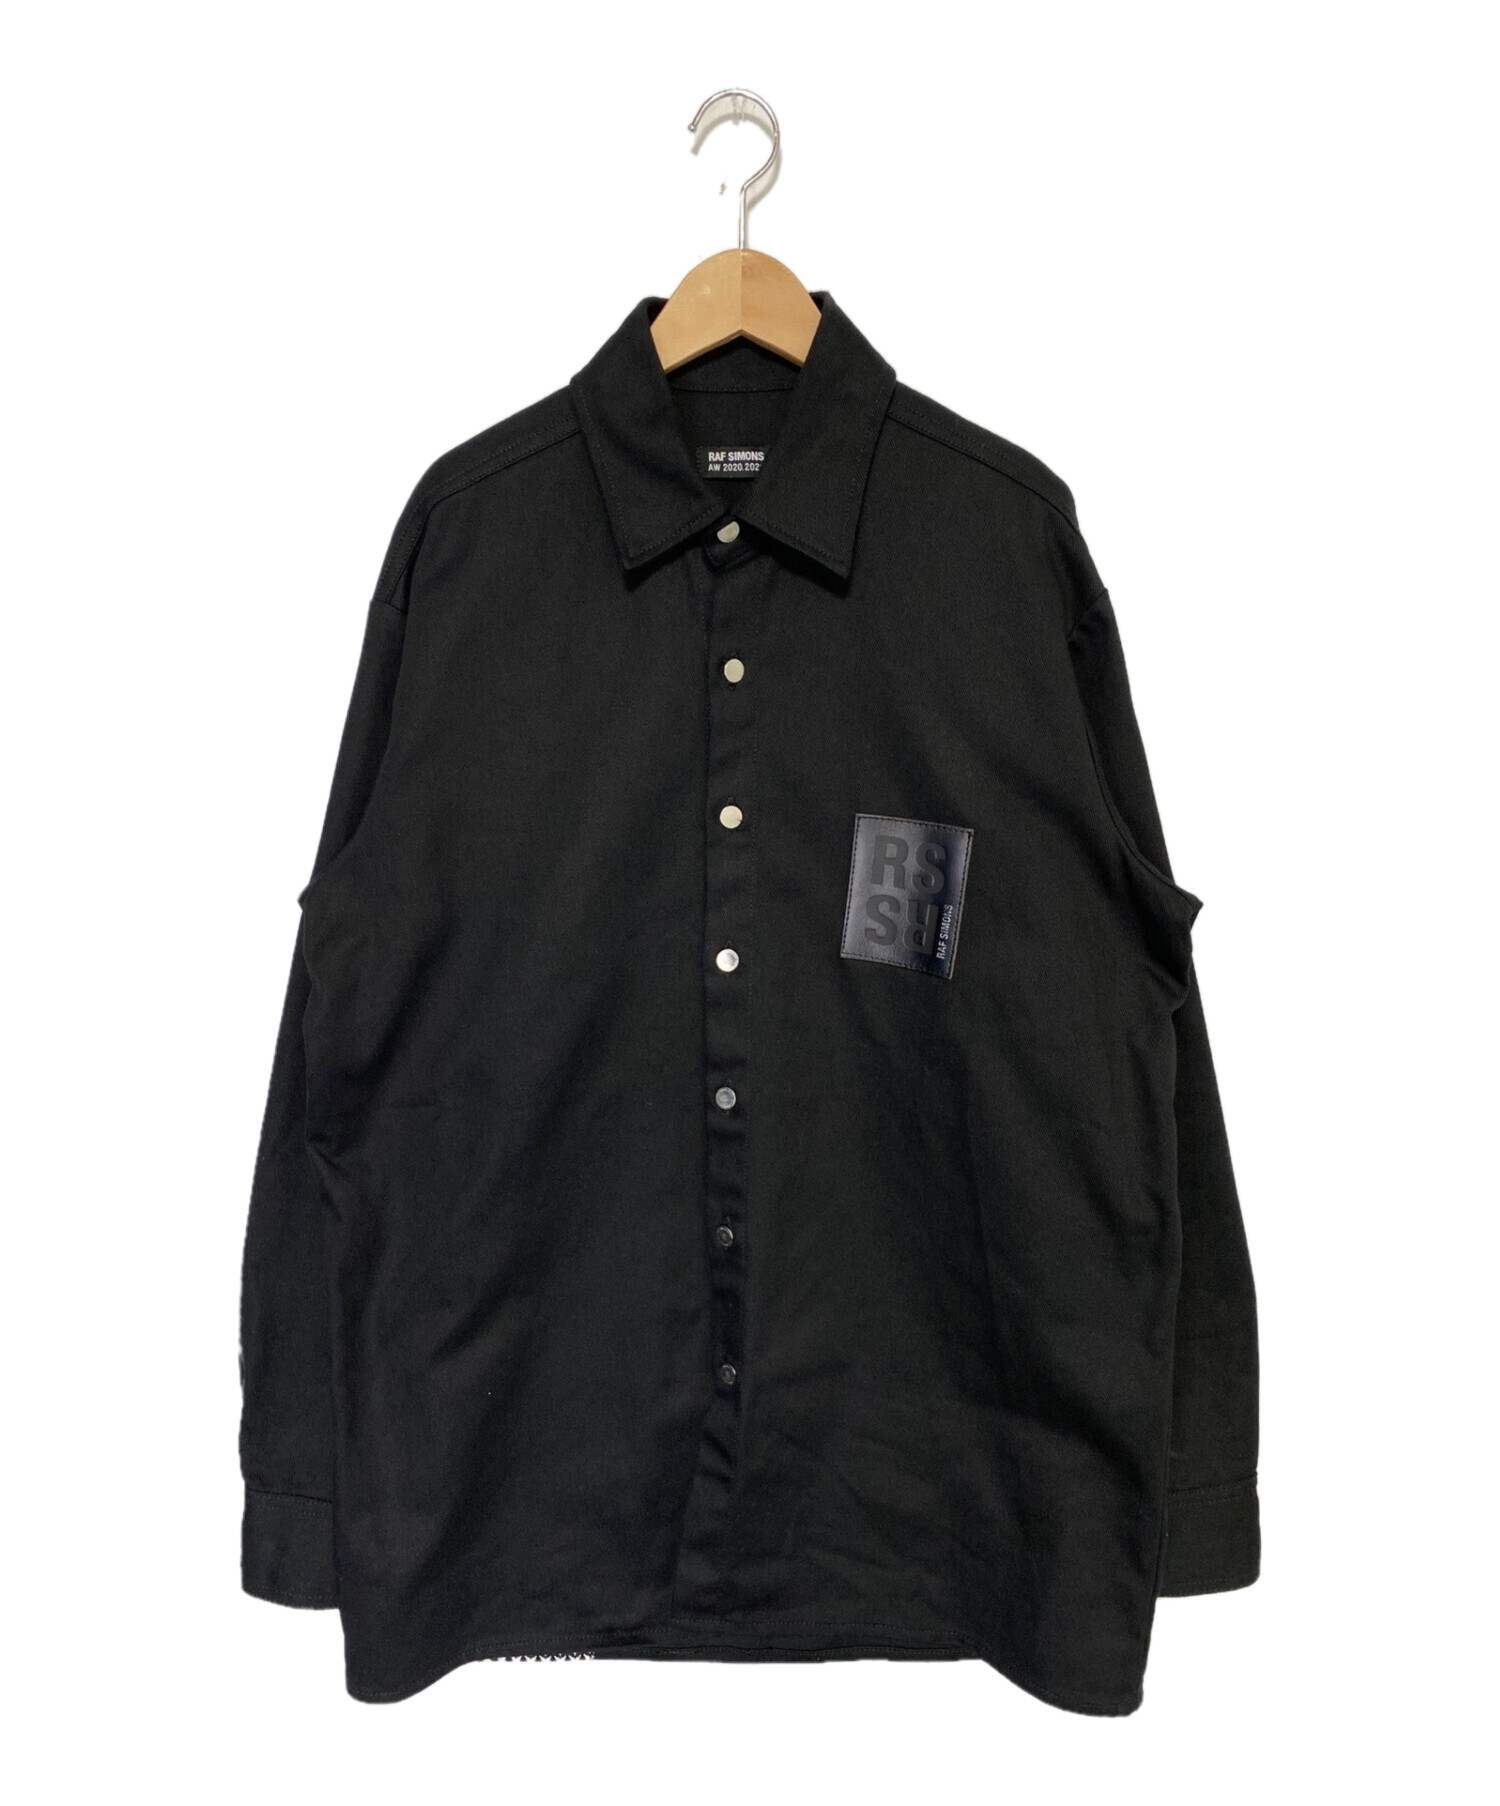 RAF SIMONS (ラフシモンズ) Slim fit denim shirt ブラック サイズ:S